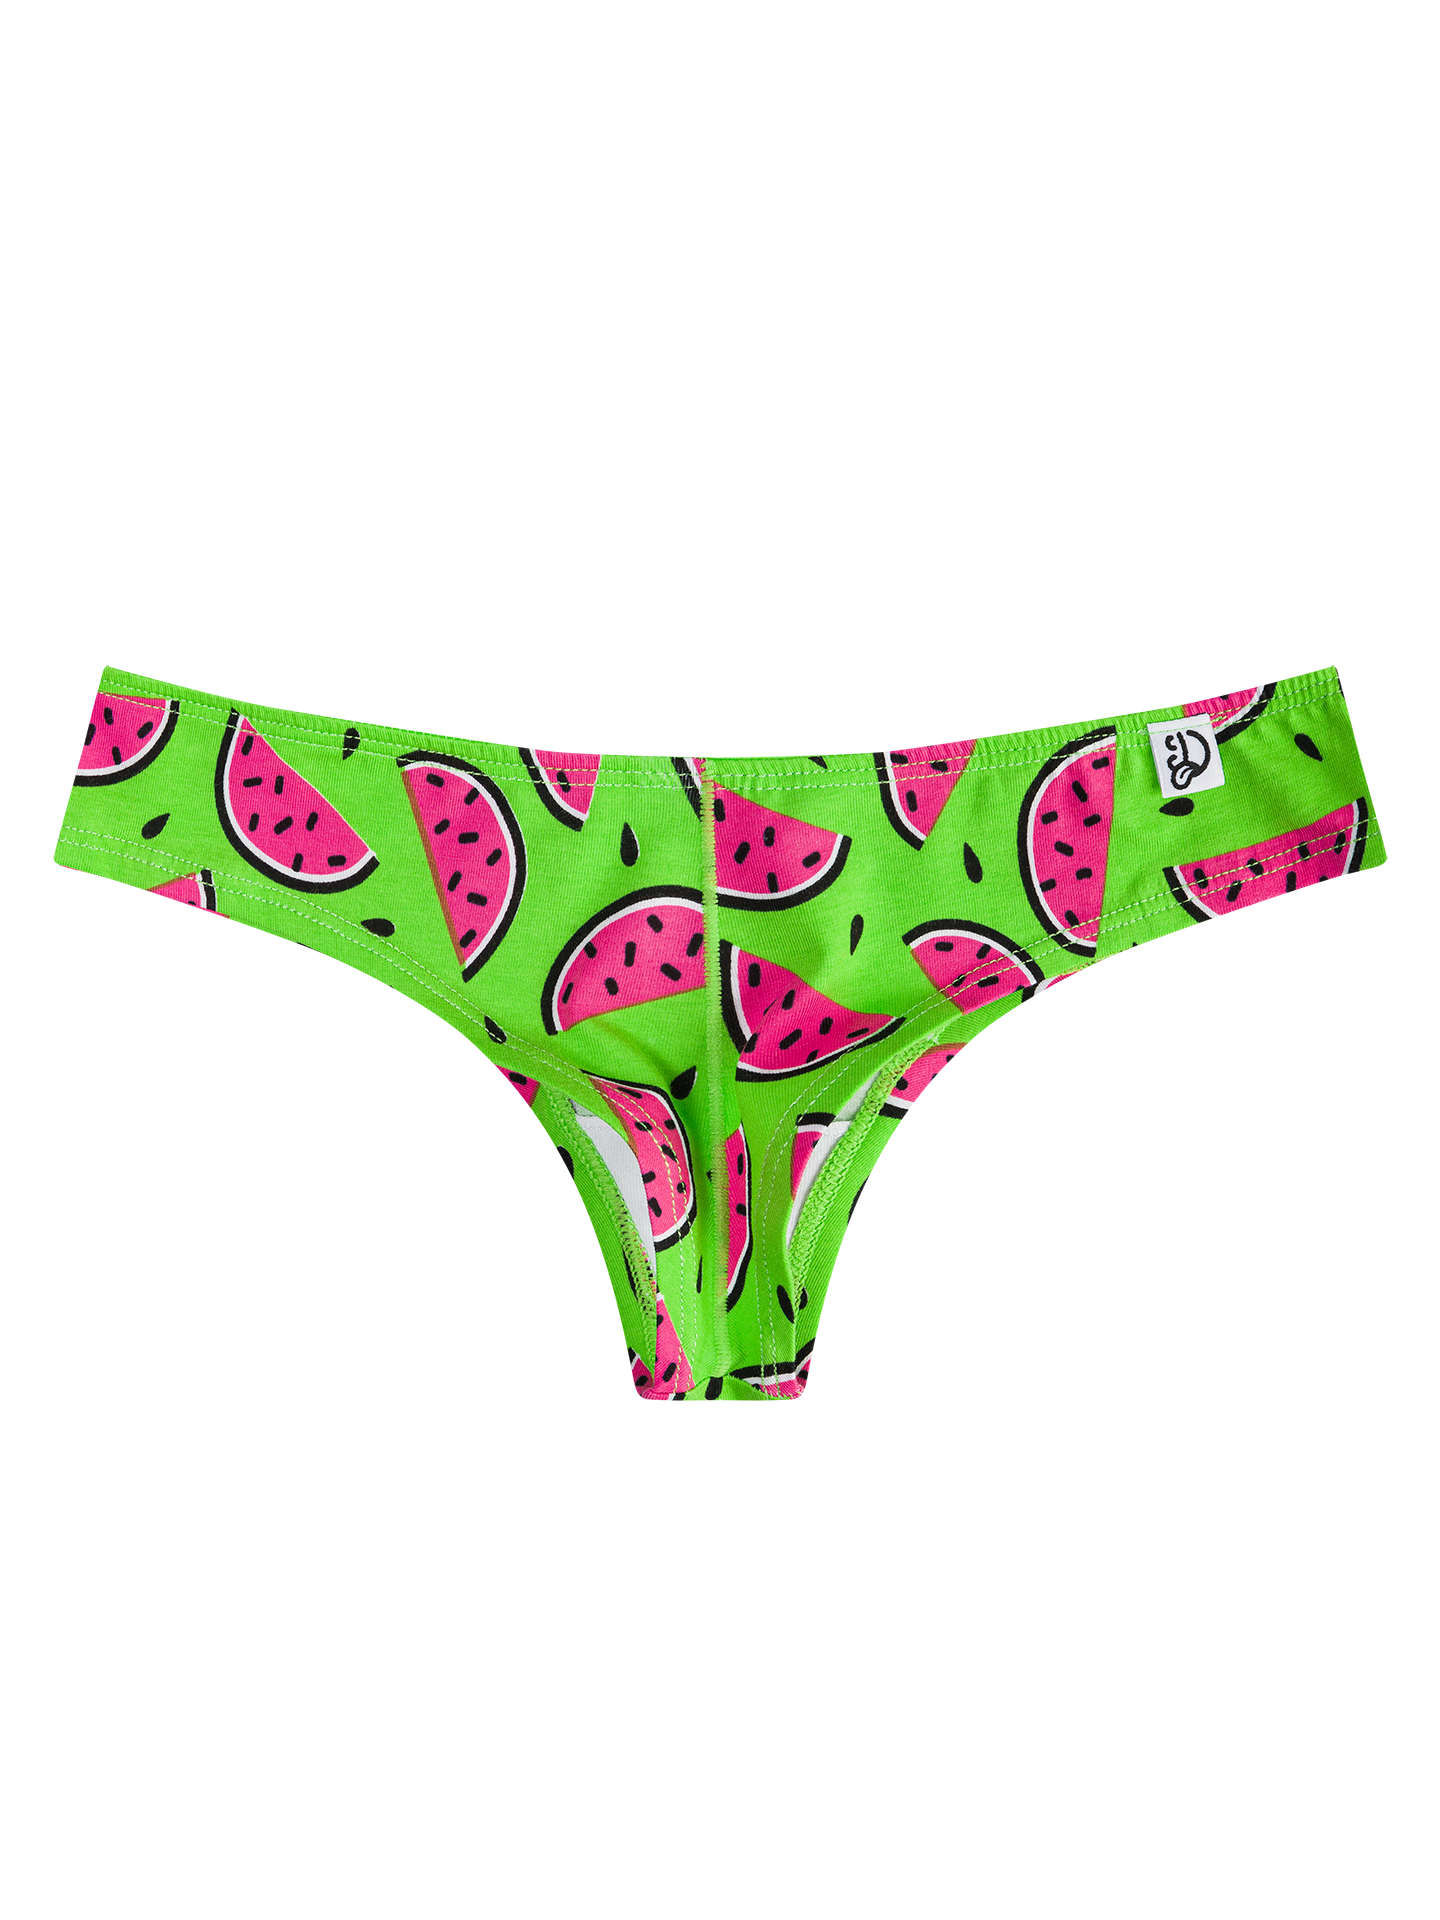 Women's Brazilian Panties Juicy Watermelon